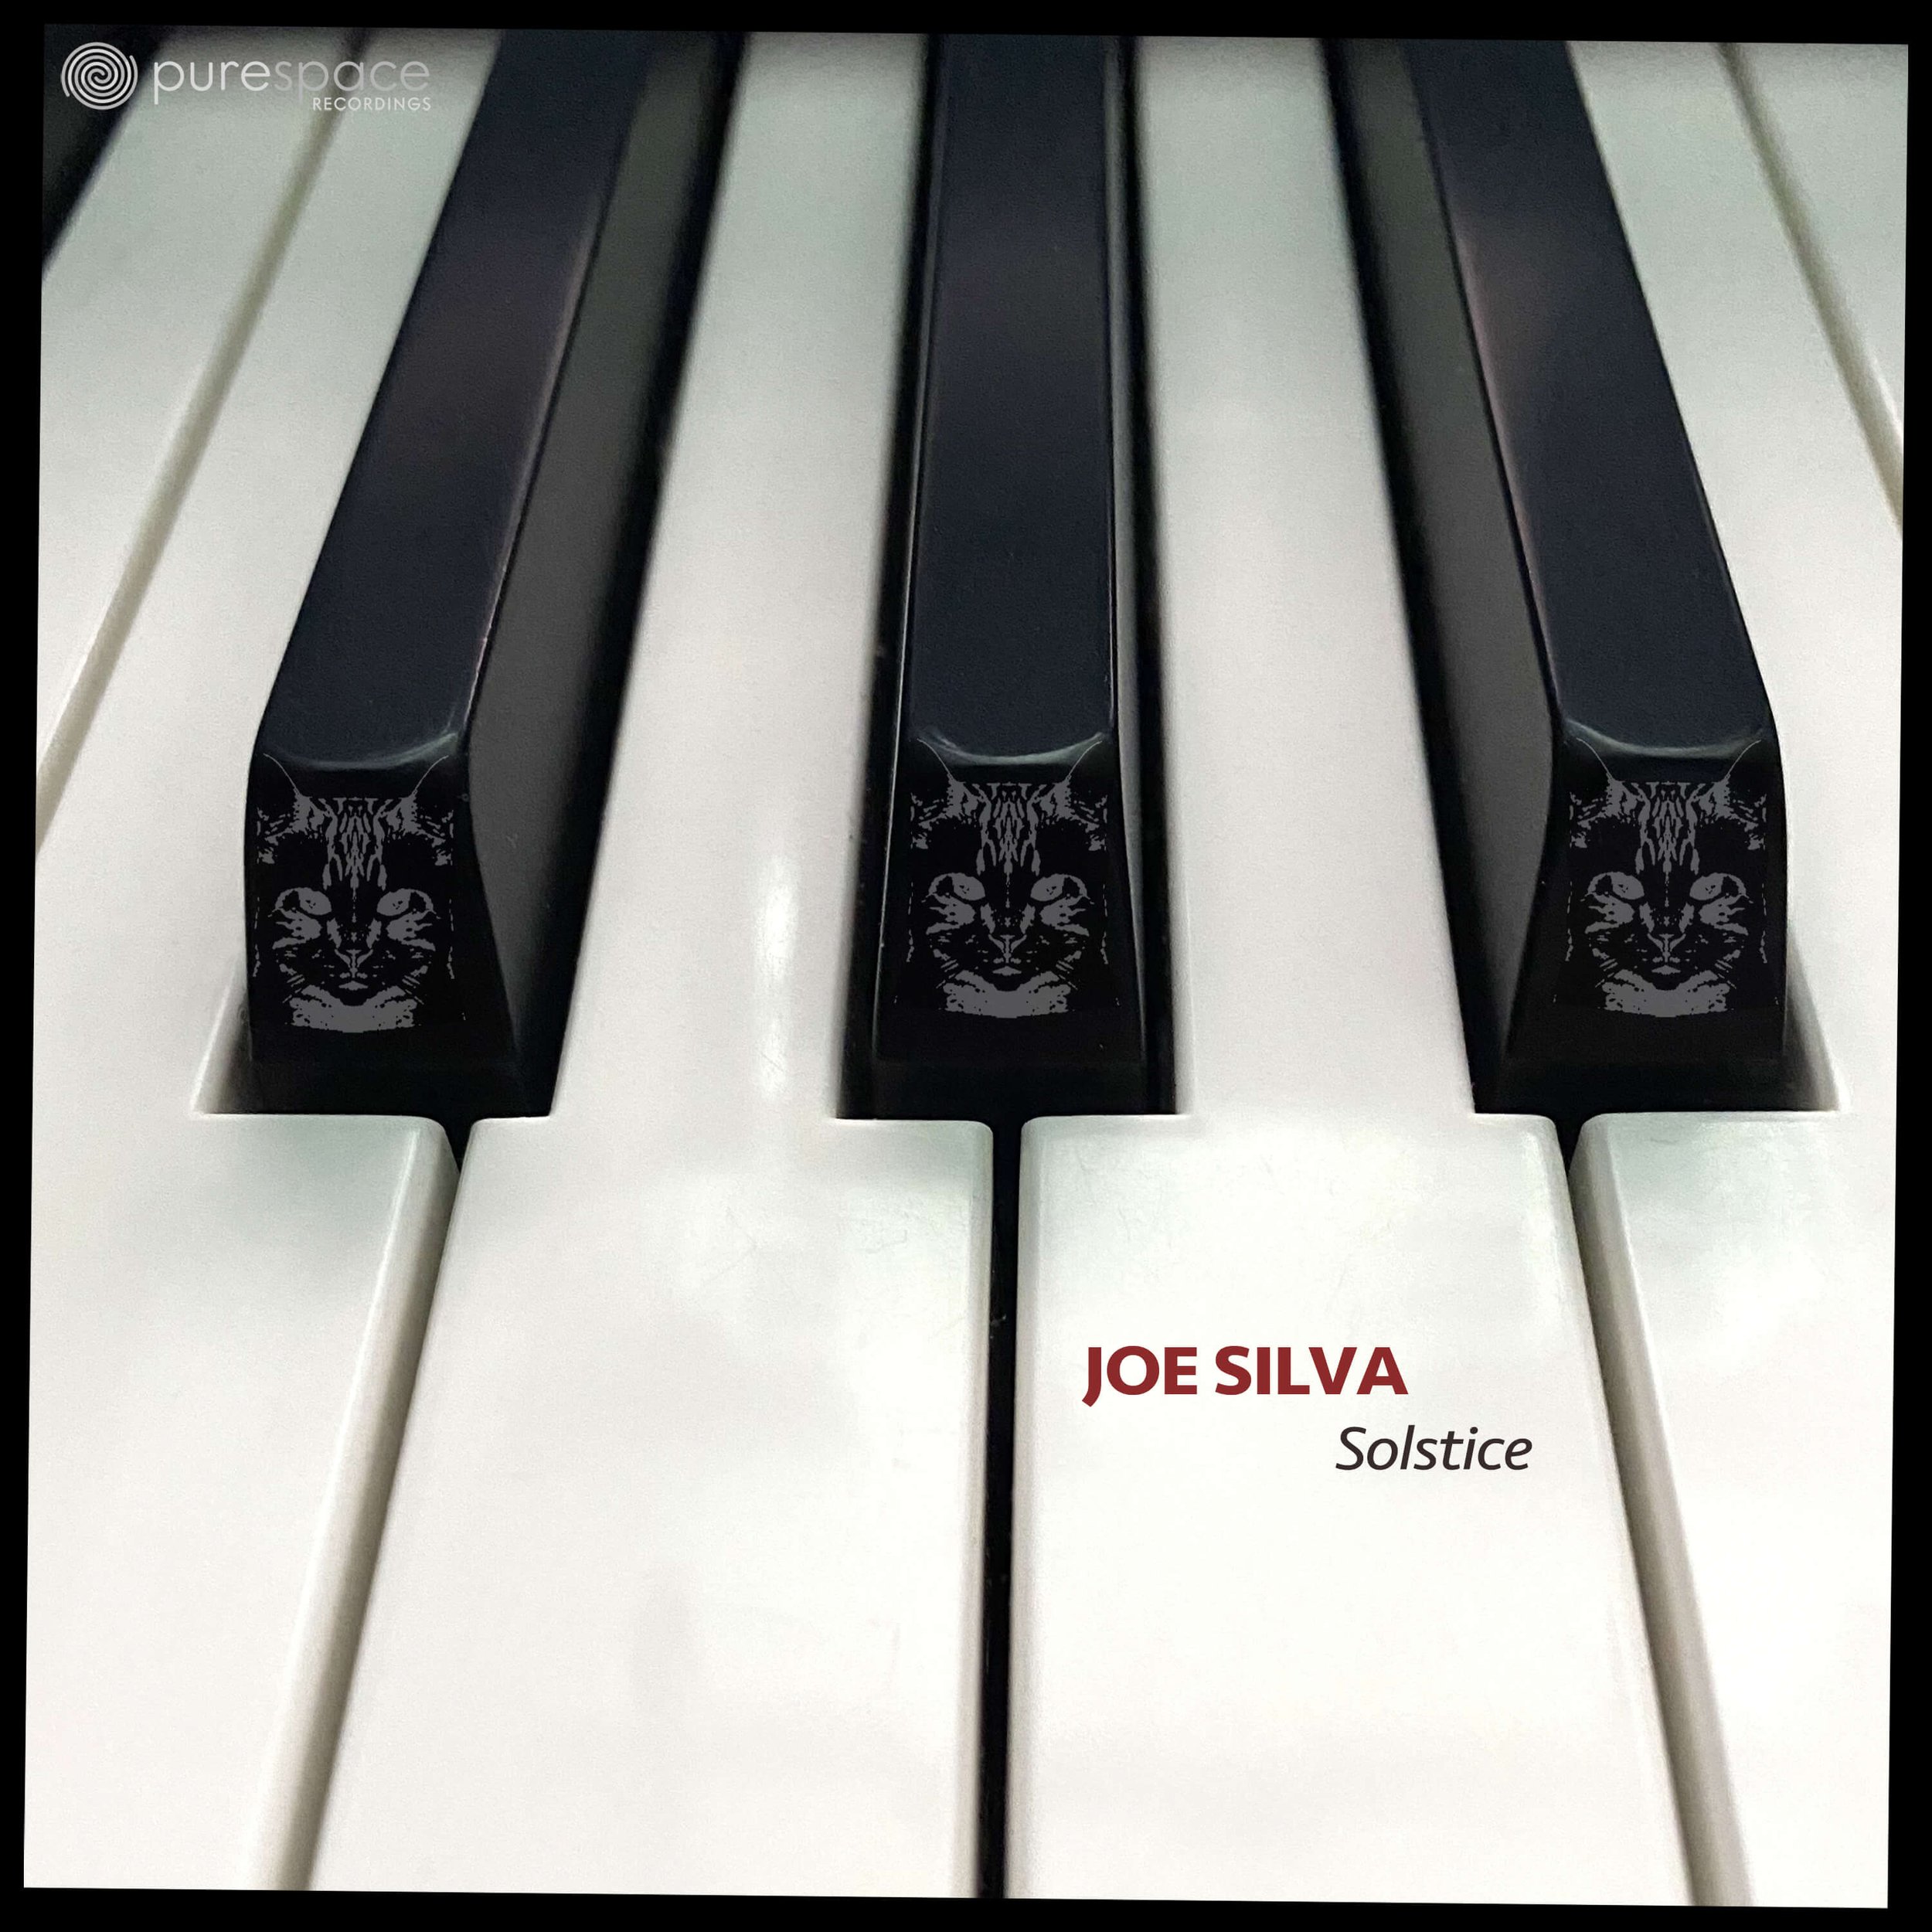 Joe Silva - Solstice (Purespace Recordings)